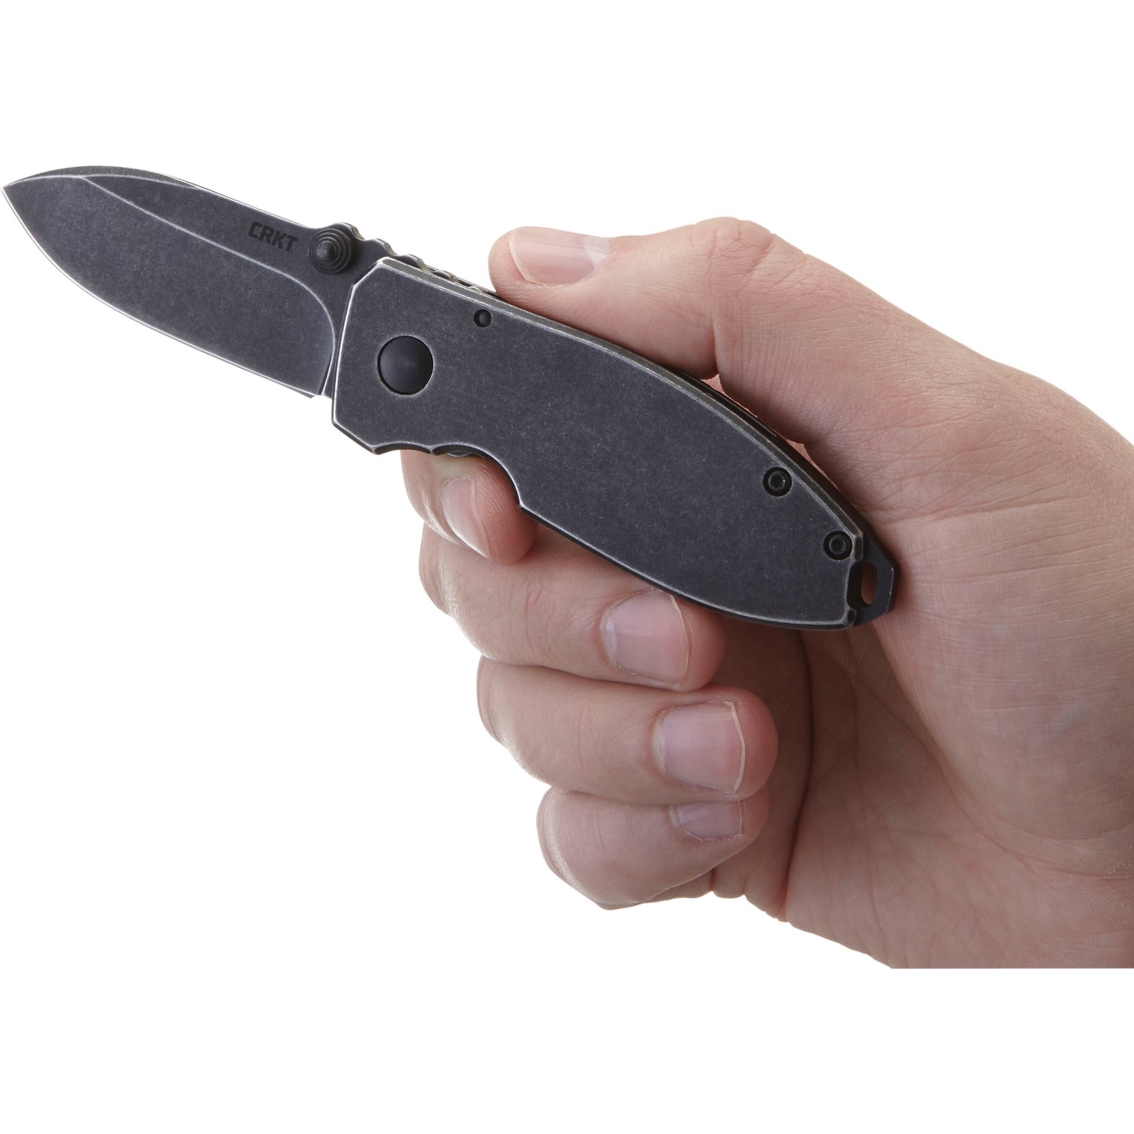 Columbia River Knife & Tool Squid Clip Folder Knife, Black Stonewash Finish - Image 4 of 4